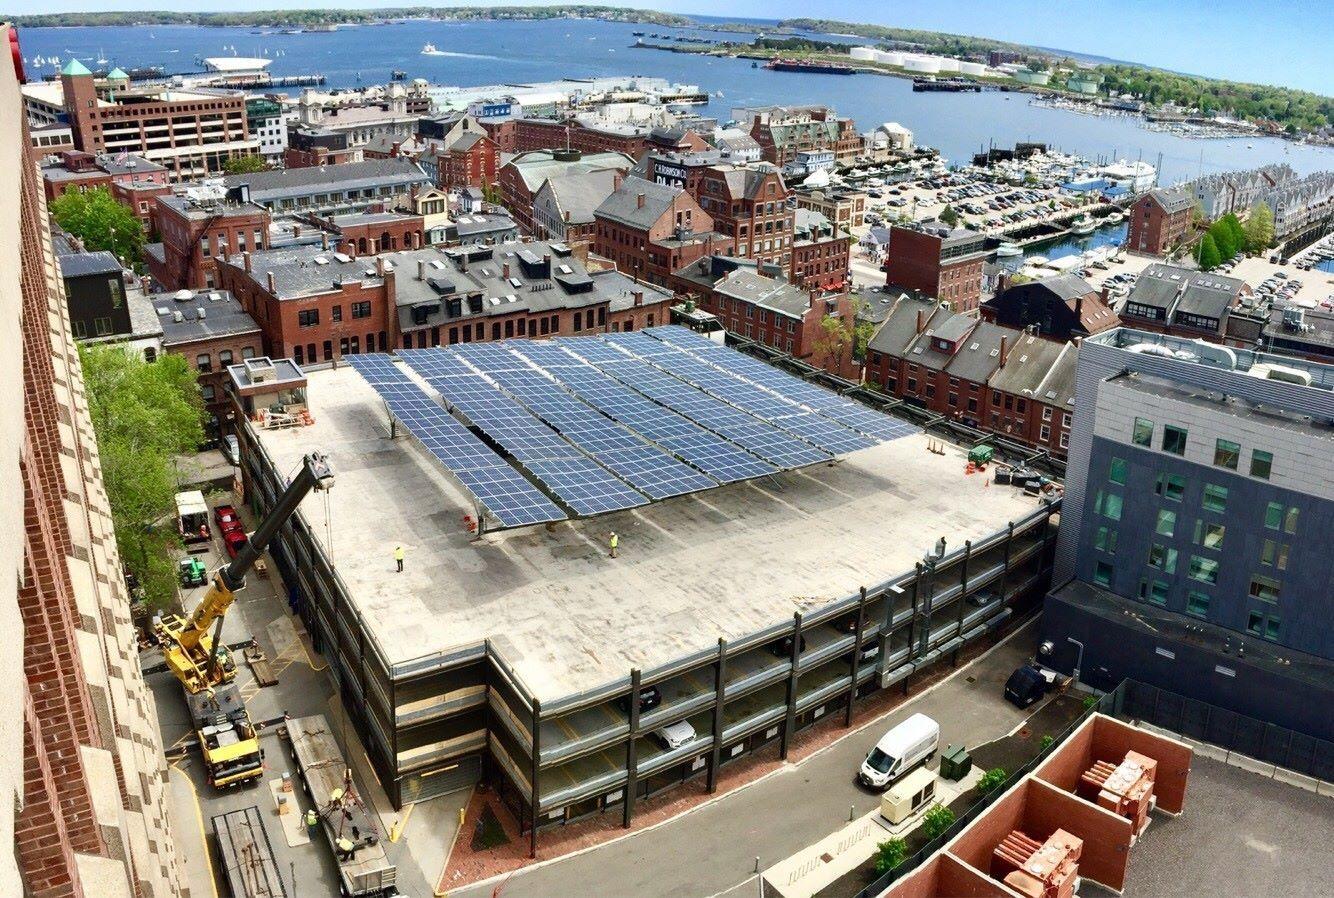 Old Port parking garage does double duty as solar farm